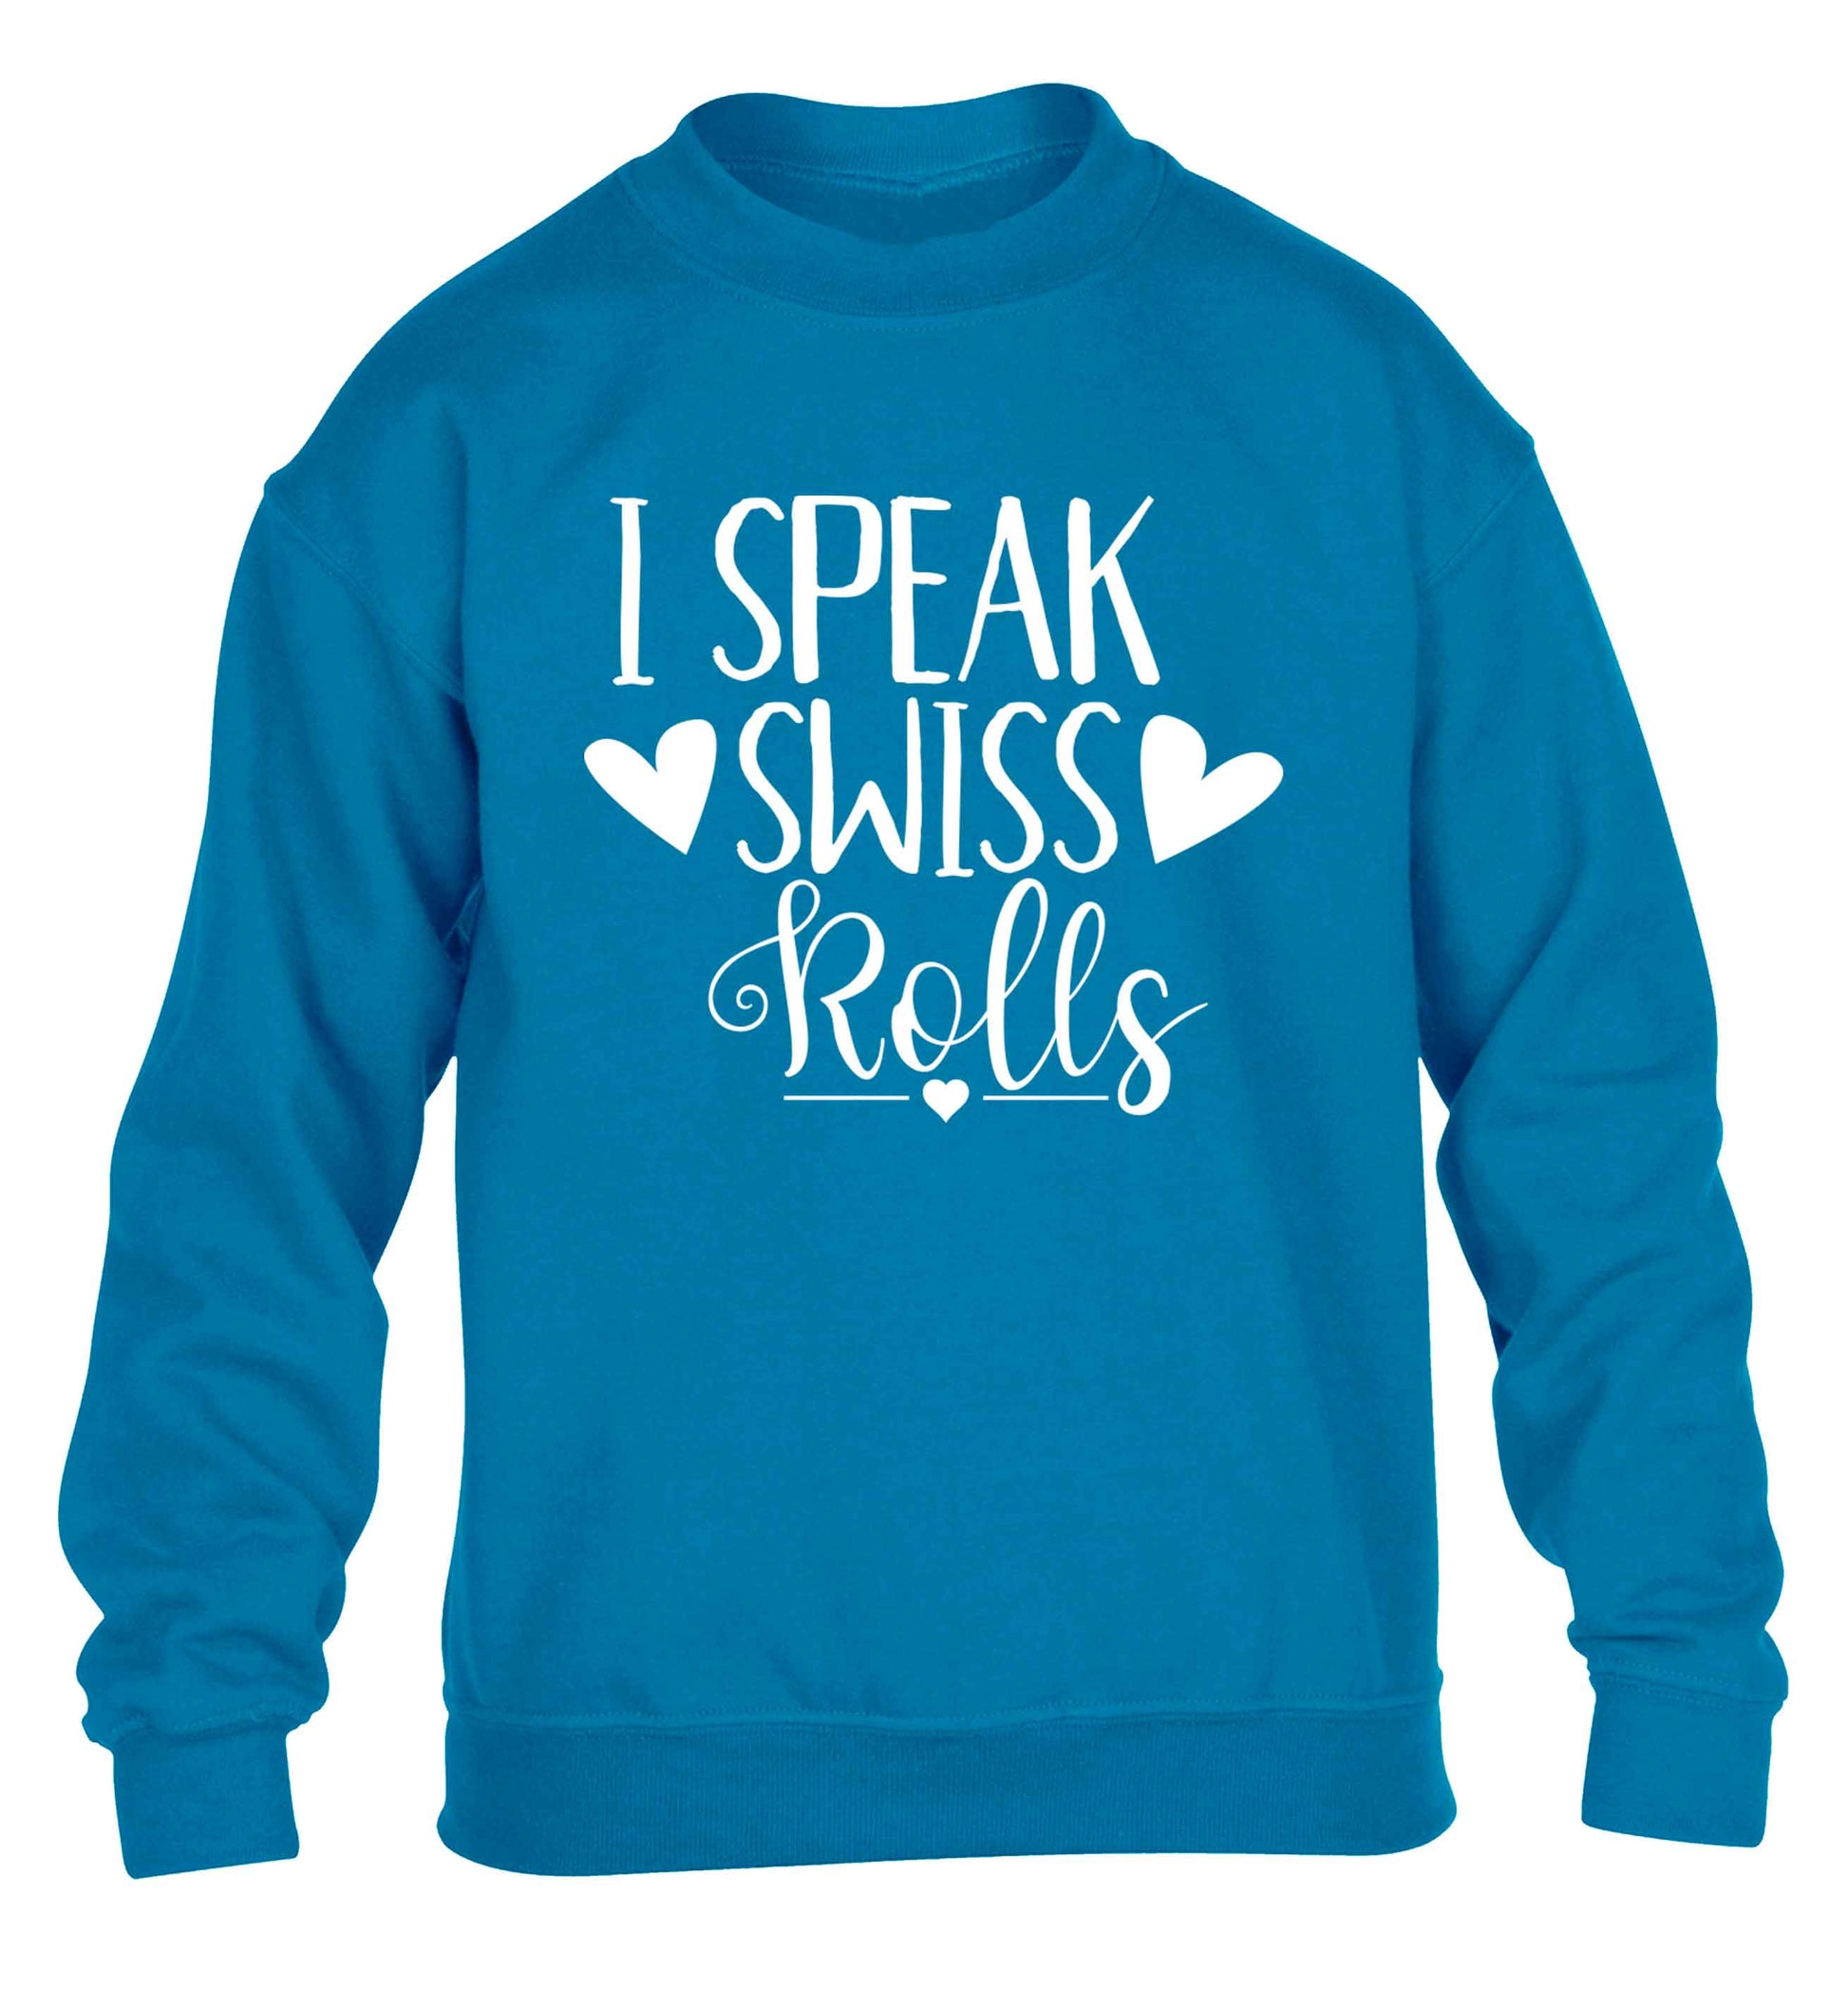 I speak swiss..rolls children's blue sweater 12-13 Years